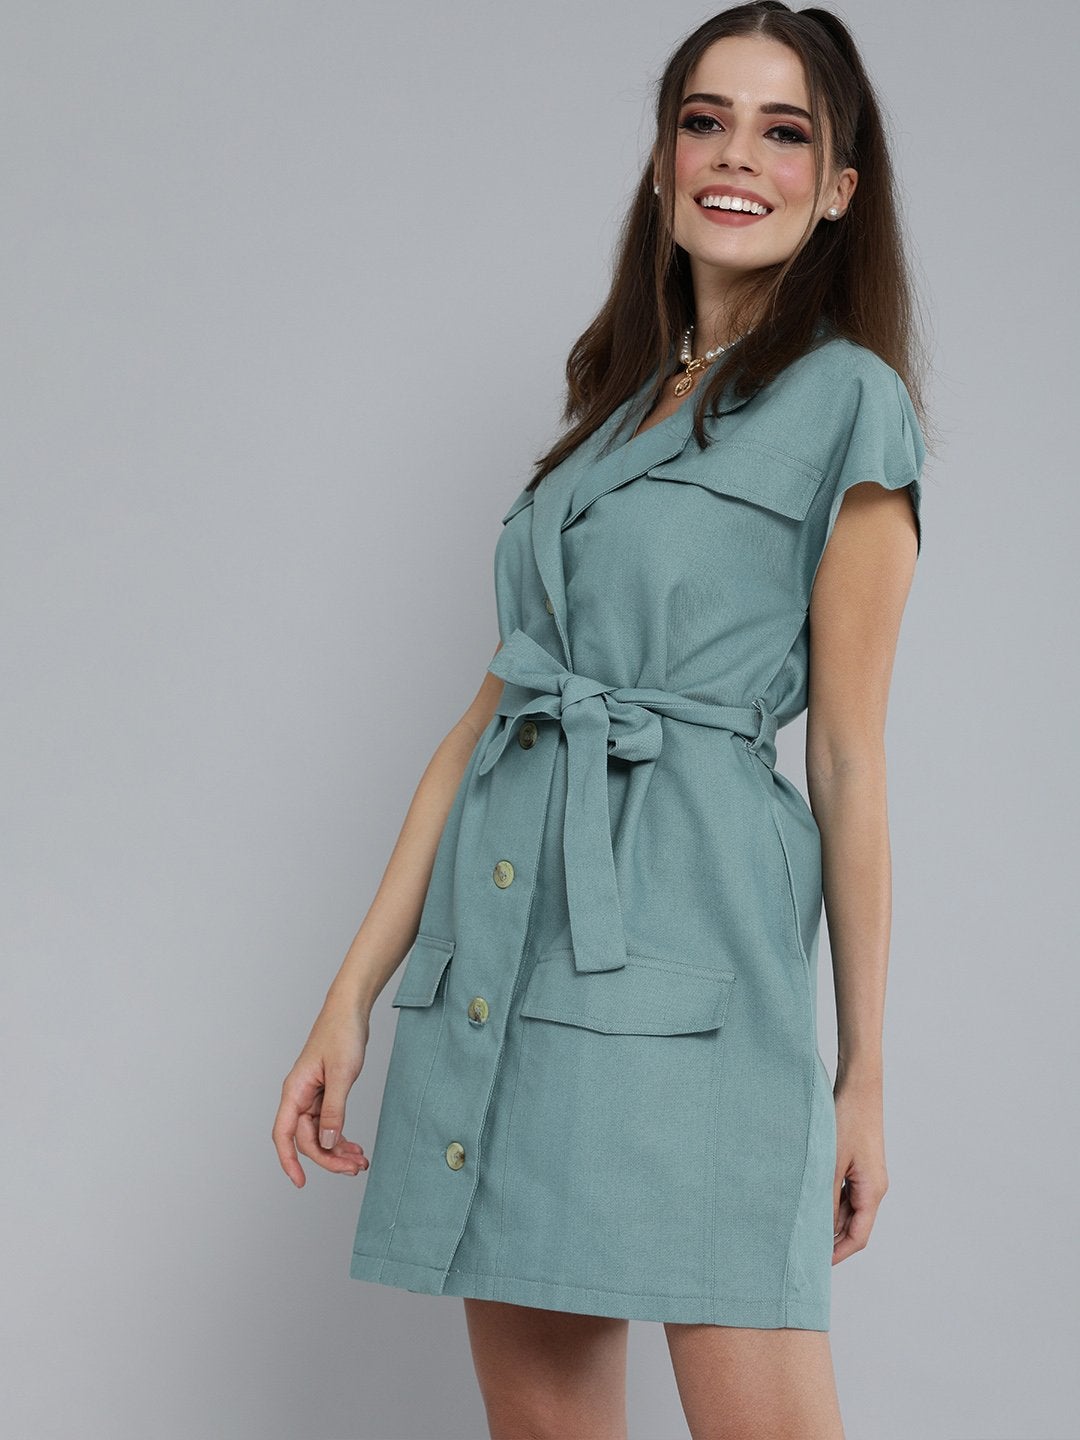 Women's Sea Green Blazer Dress - SASSAFRAS